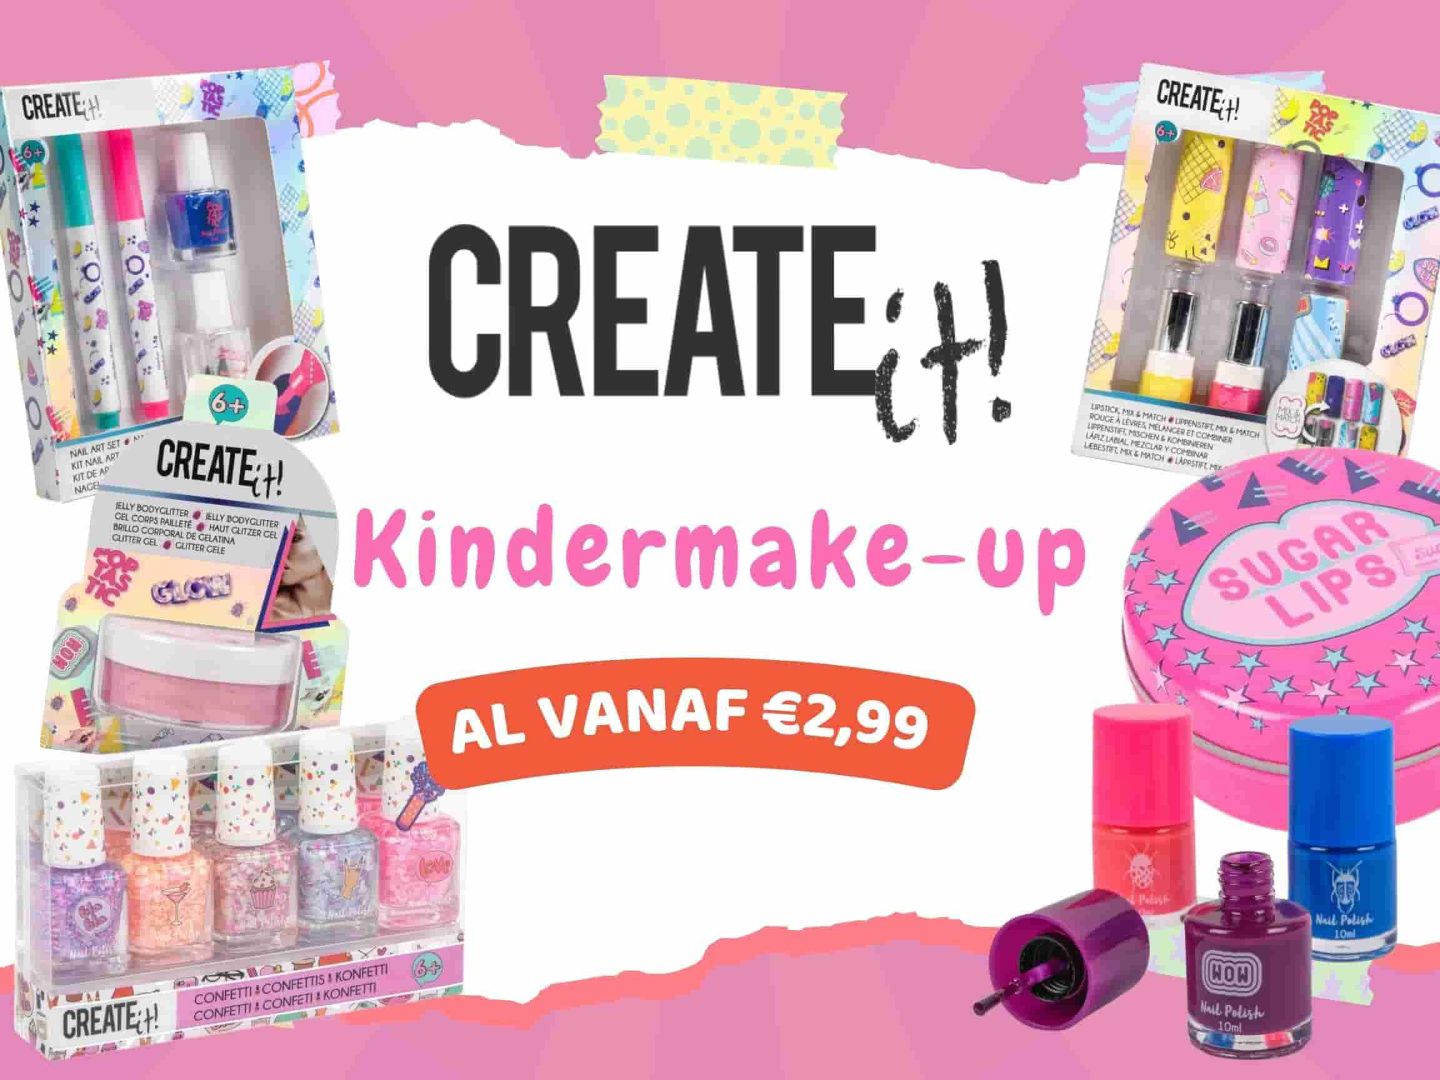 Create It kinder make-up